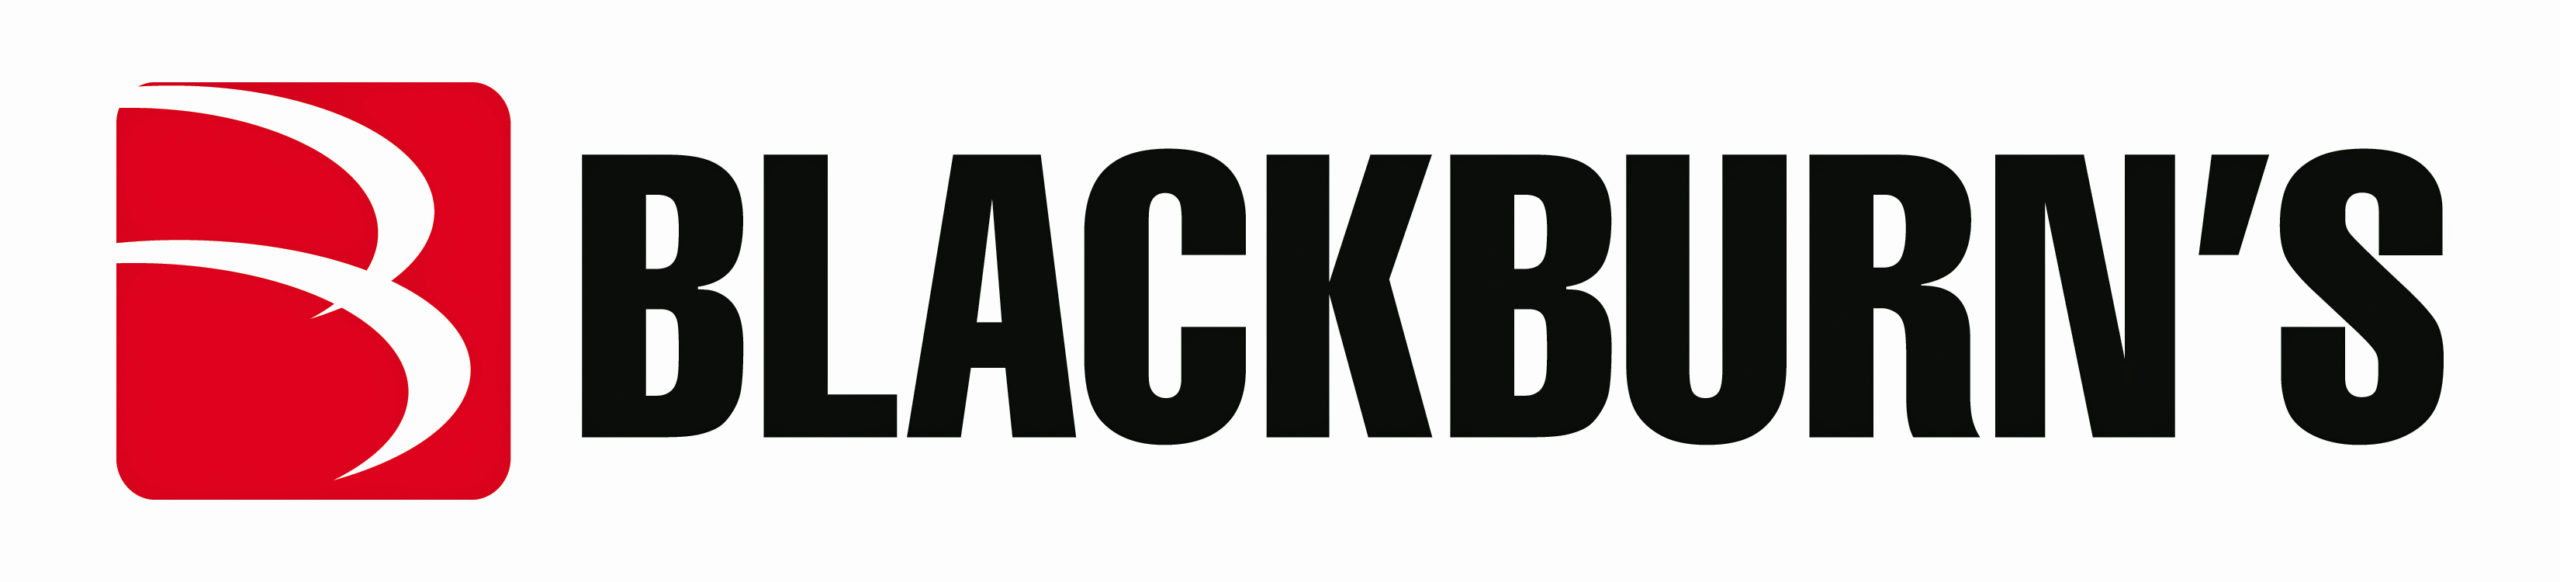 Blackburn's company logo